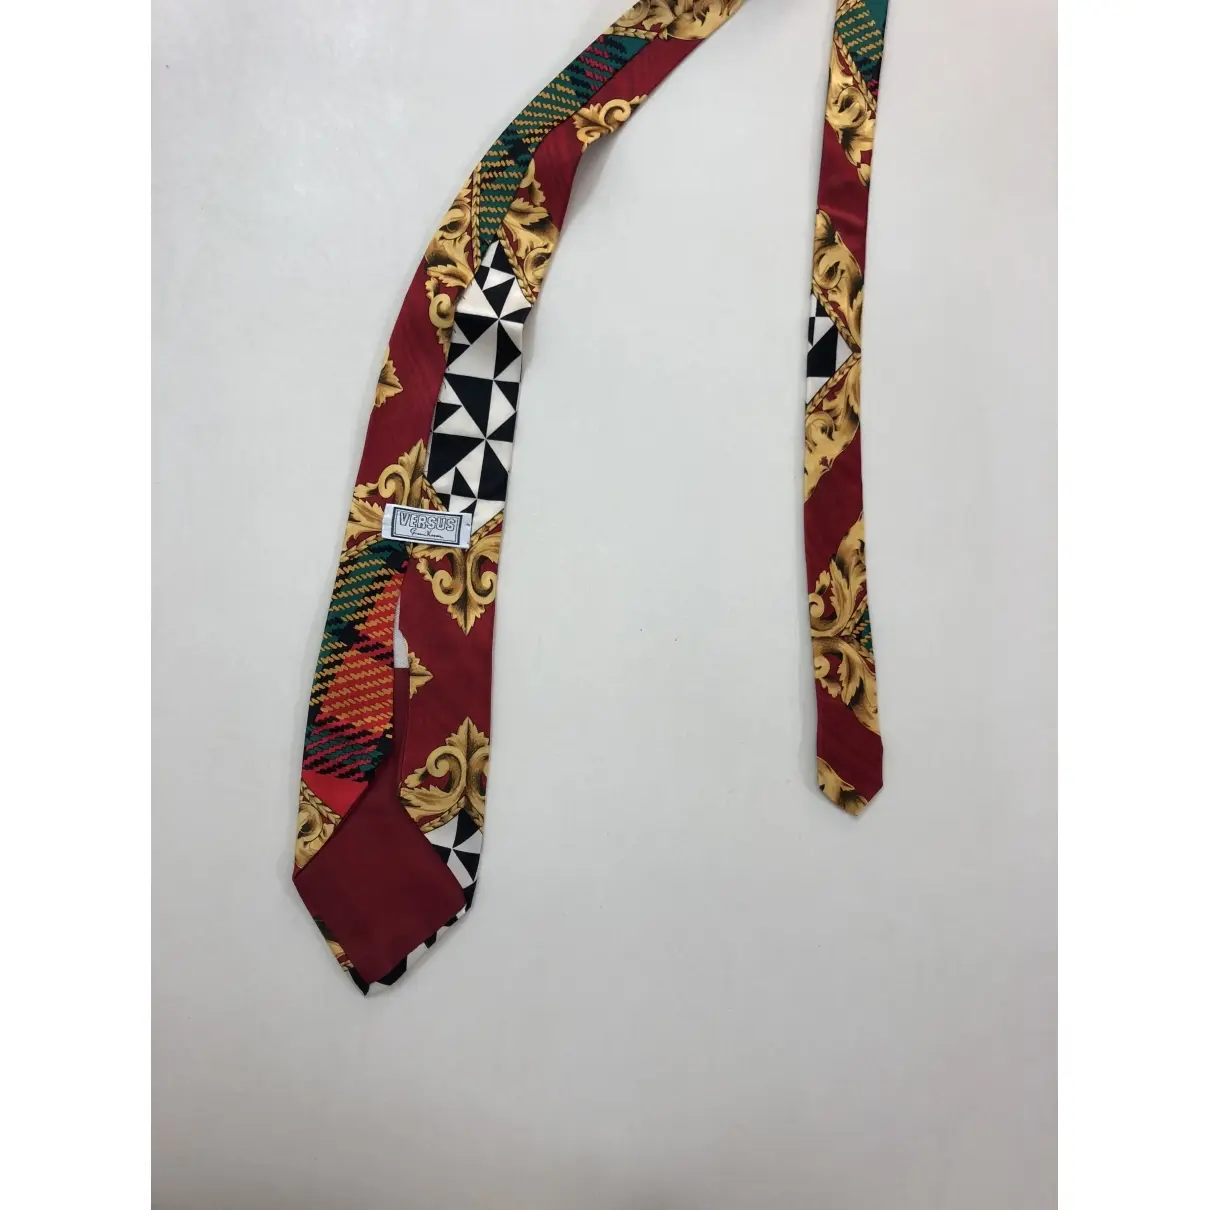 Versus Silk tie for sale - Vintage